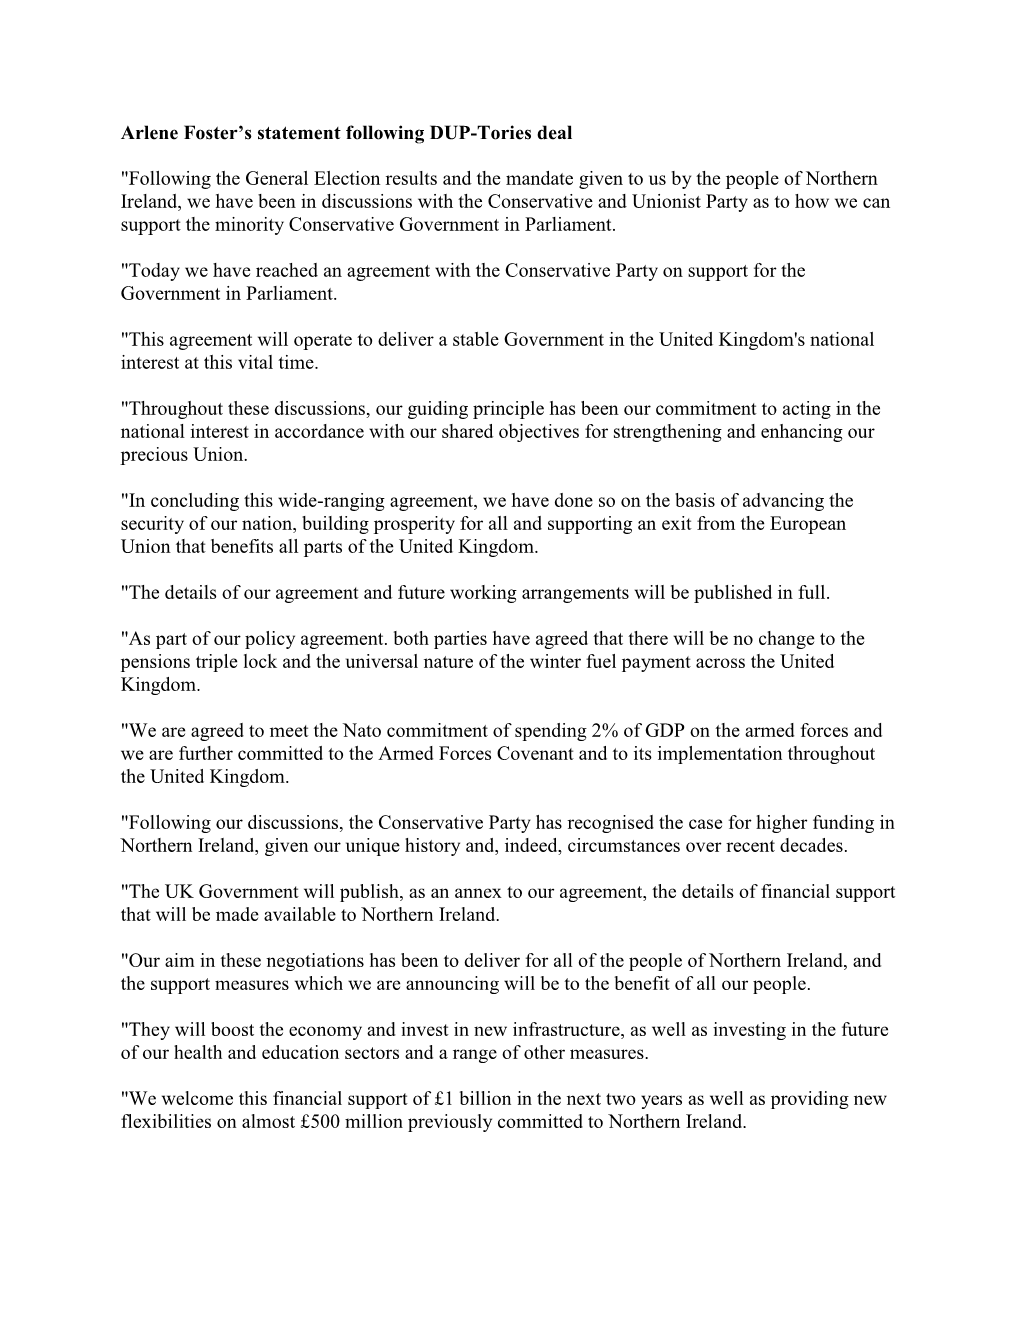 Arlene Foster's Statement Following DUP-Tories Deal "Following The